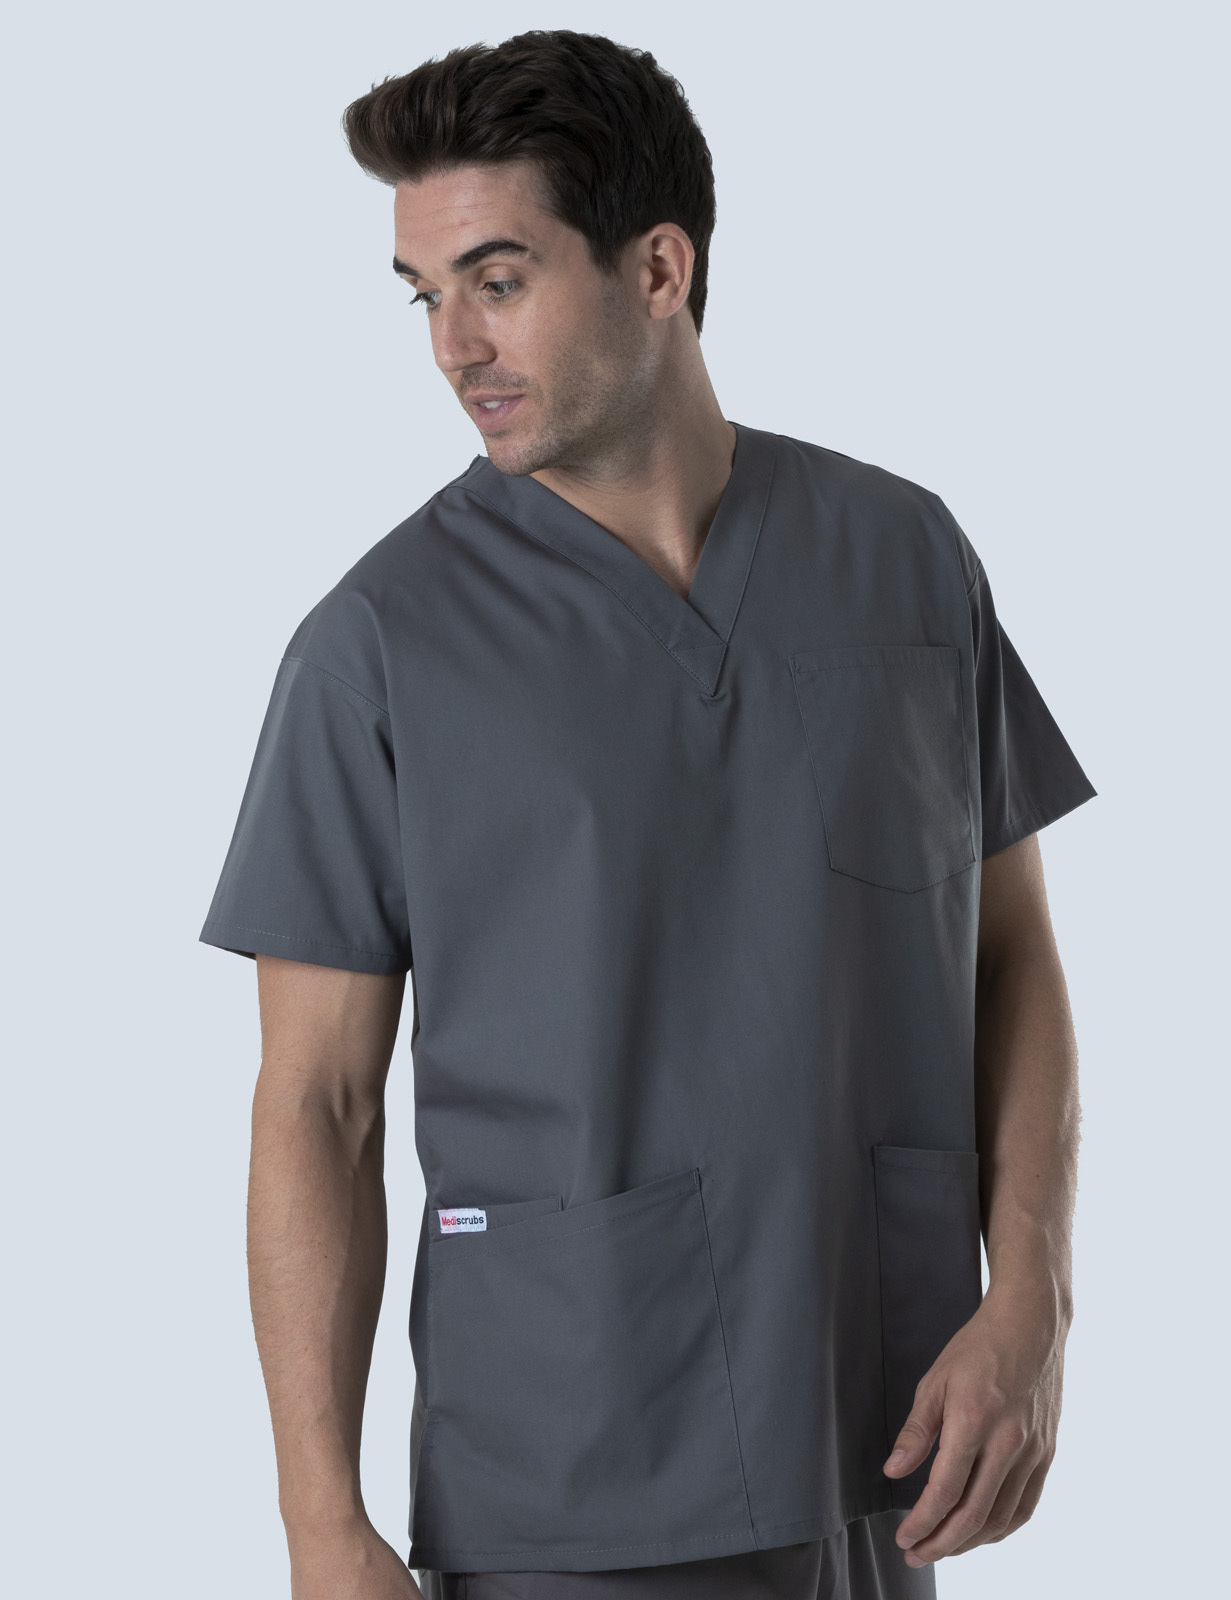 Rockhampton Hospital Emergency Department Enrolled Nurse Set Uniform (4 Pocket Top and cargo Pants in Steel Grey + Logos)